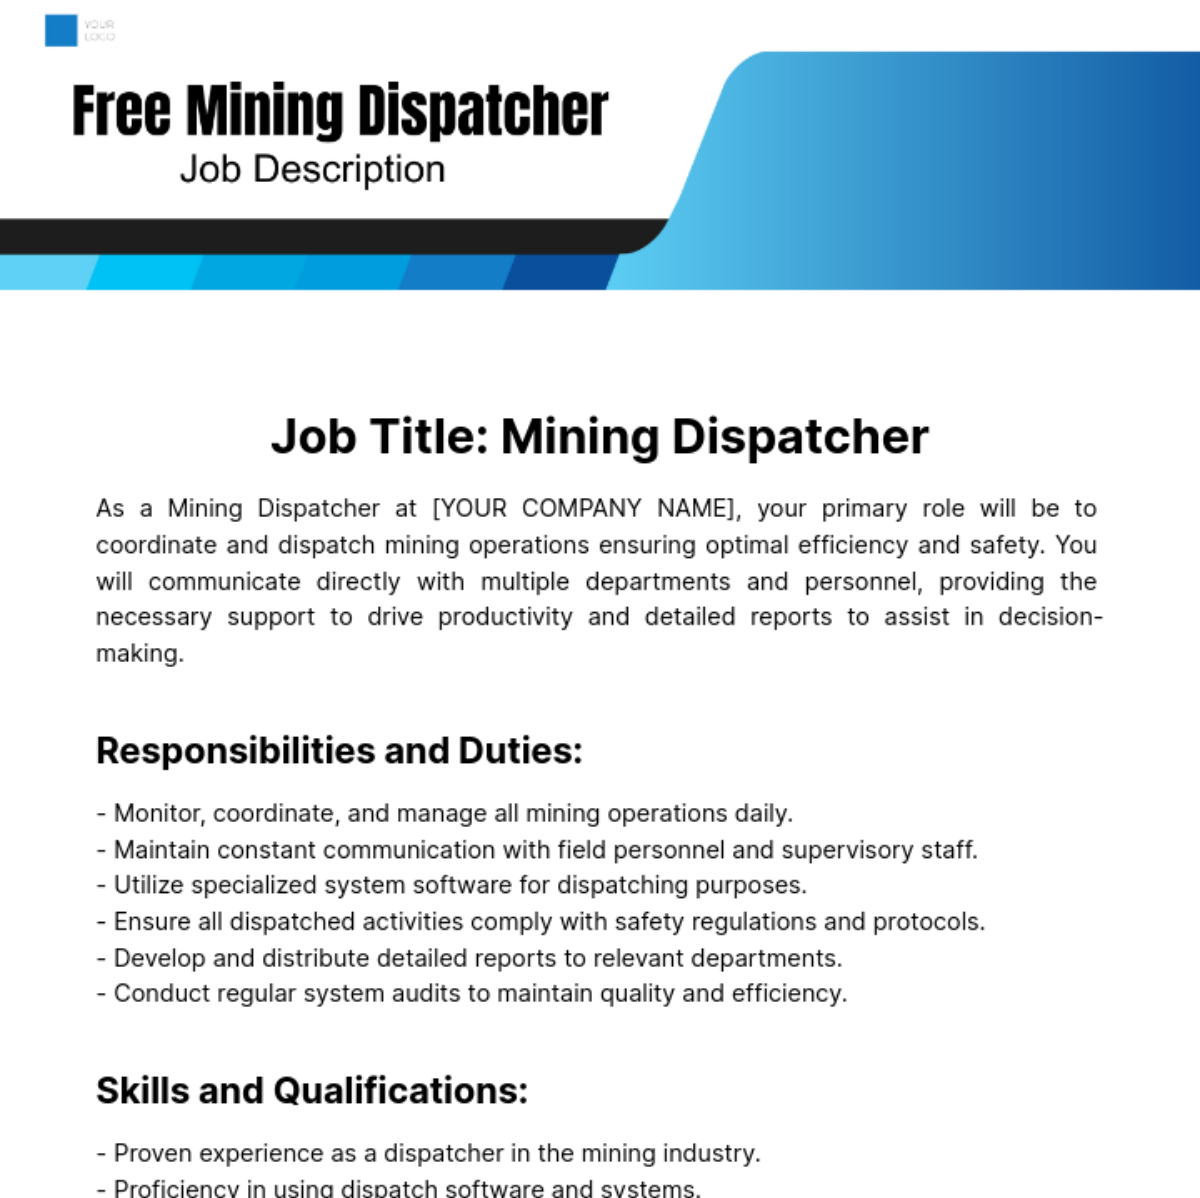 Free Mining Dispatcher Job Description Template